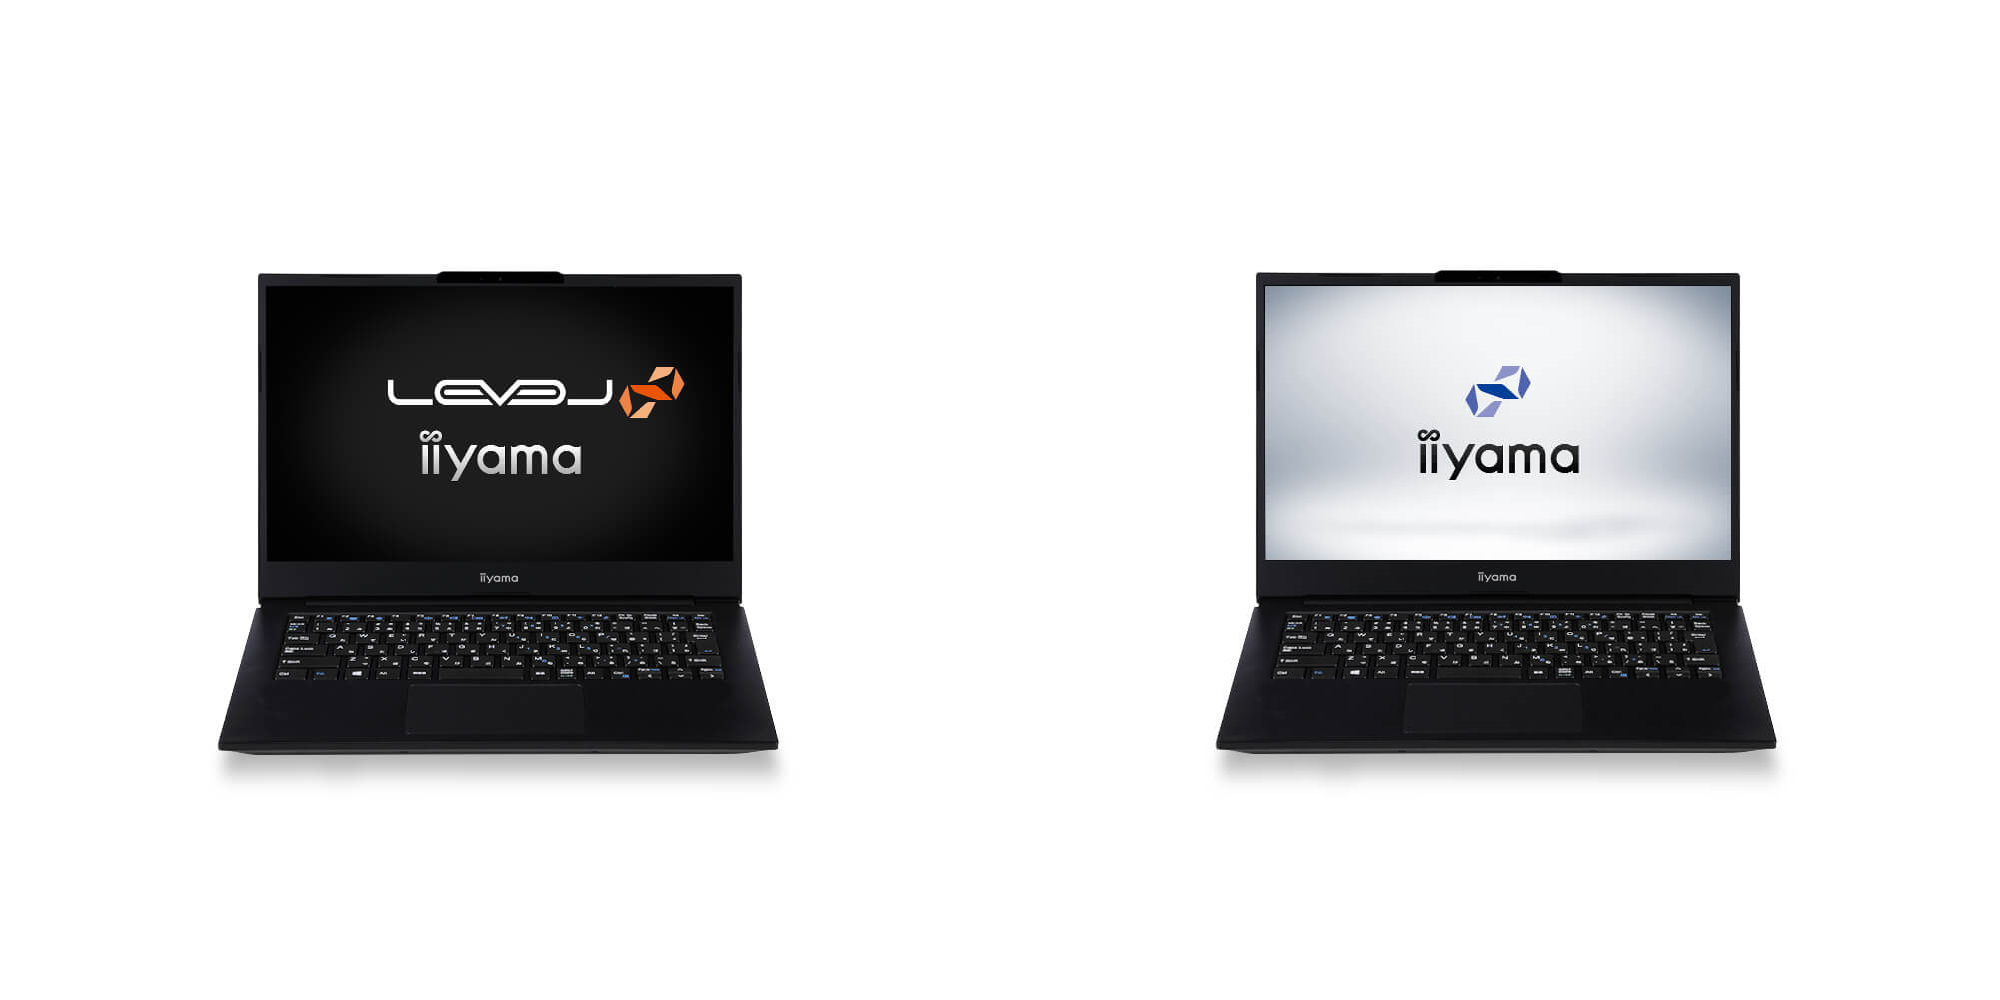 Iiyama Pcより 第11世代 インテル R Core Tm プロセッサー 搭載1kg以下 軽量 薄型 14型ノート パソコン発売 株式会社ユニットコムのプレスリリース